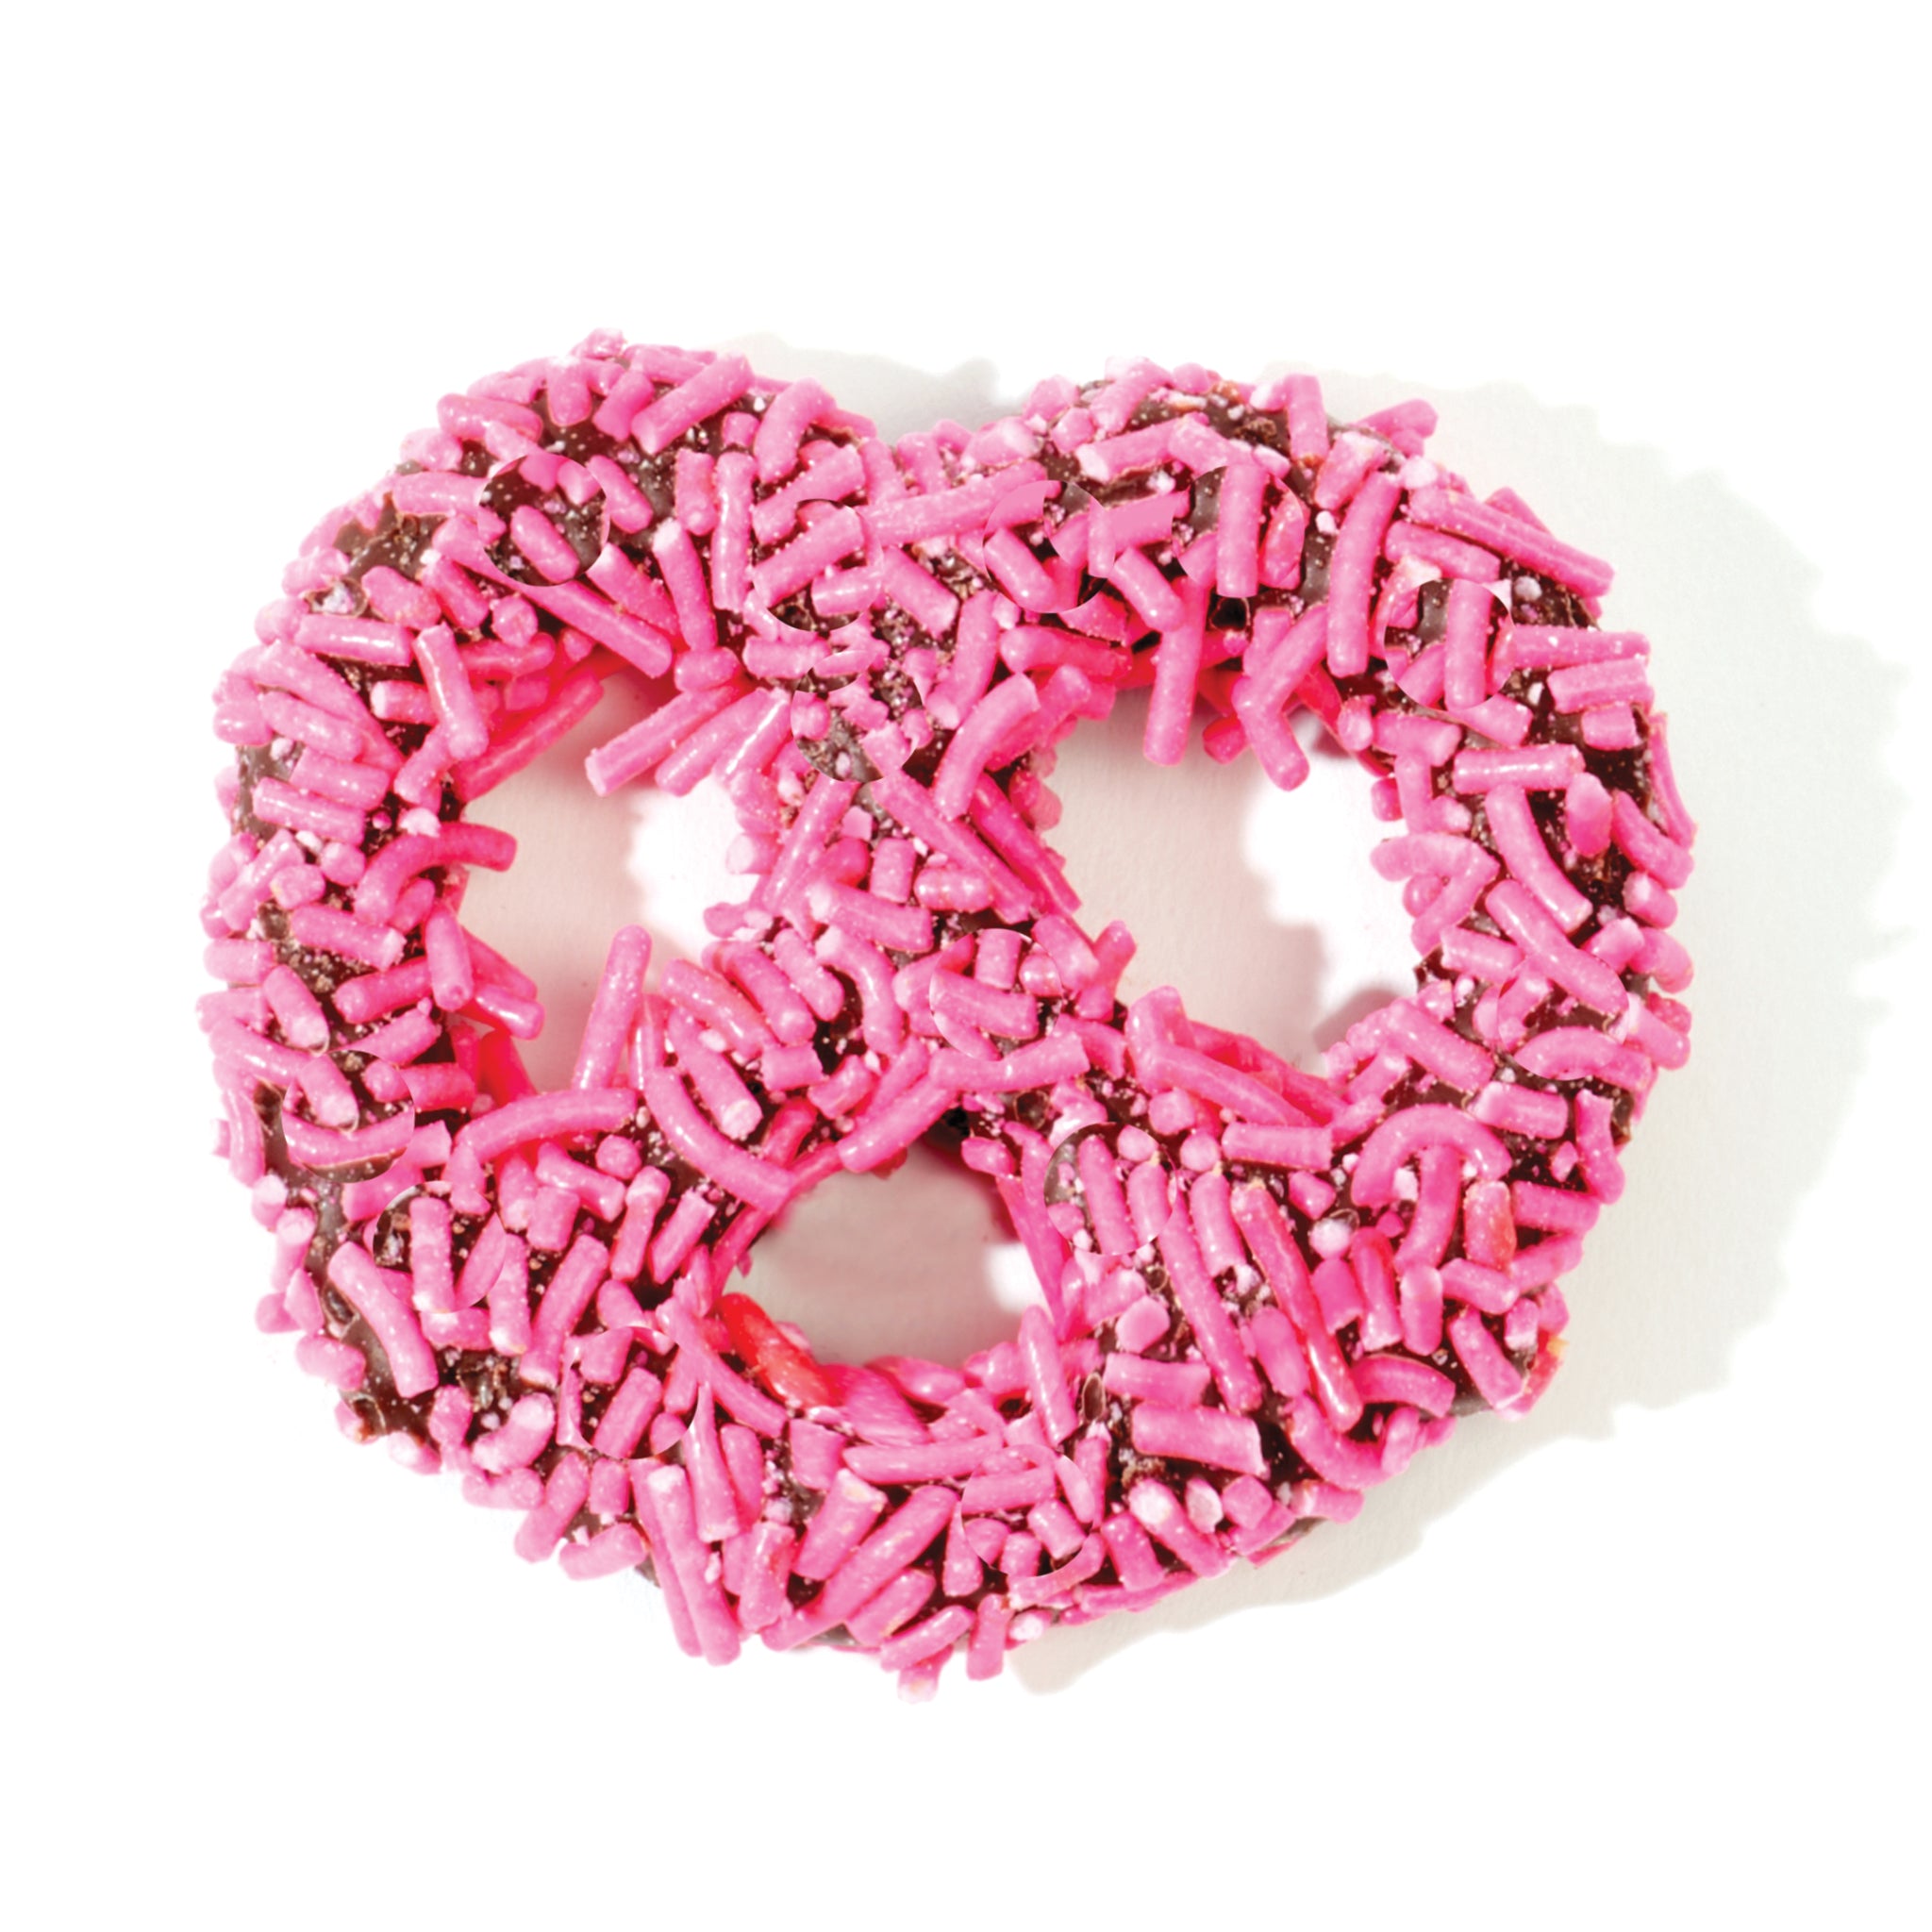 Chocolate Pretzel - Pink Sprinkles